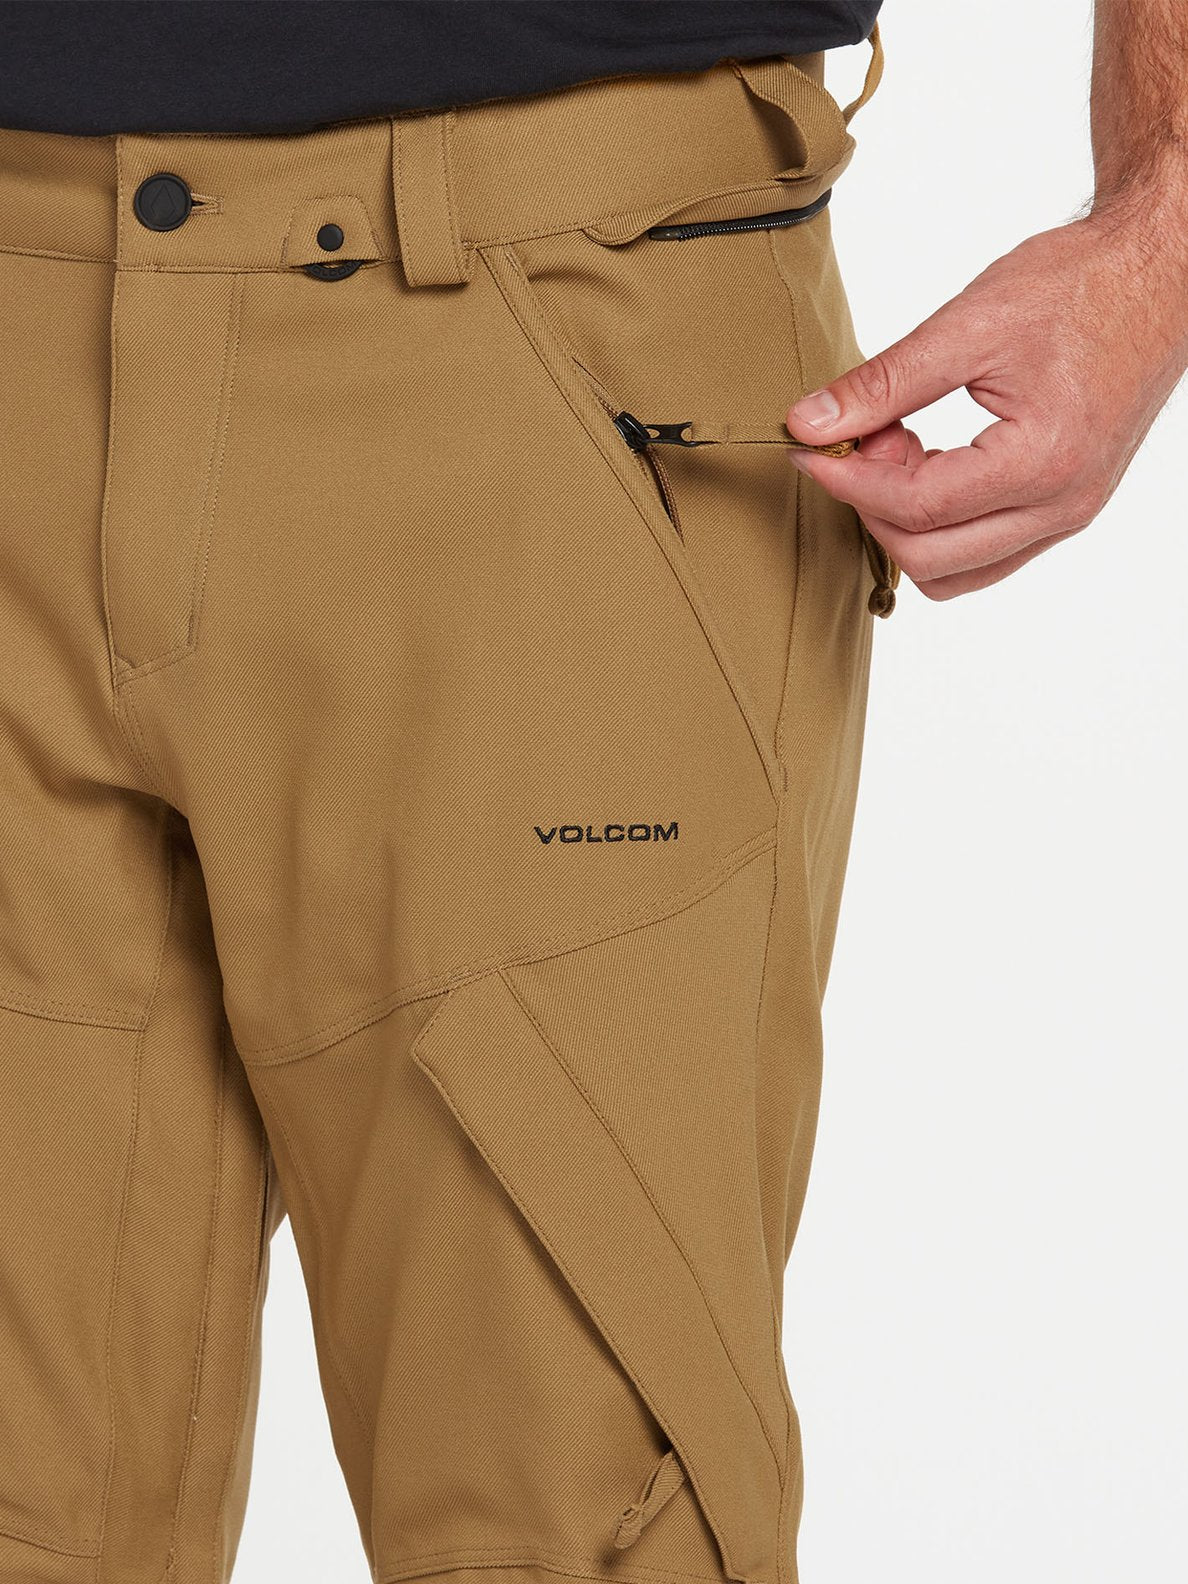 Volcom Mens New Articulated Pants - Black Burnt khaki